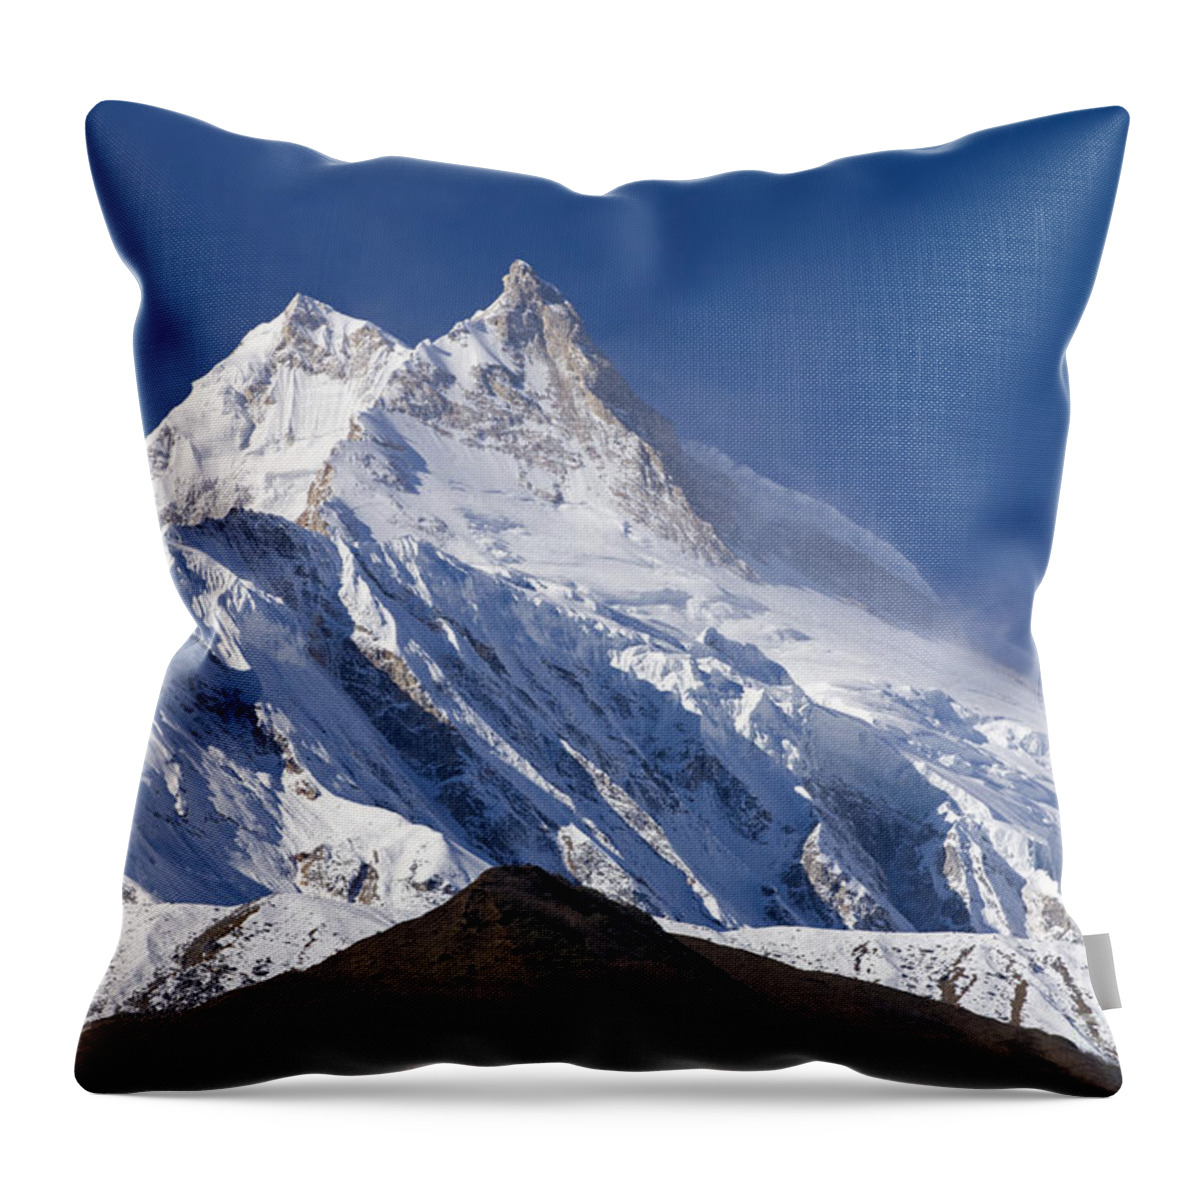 Nepal_d1338 Throw Pillow featuring the photograph Manaslu Peak - Nepal by Craig Lovell